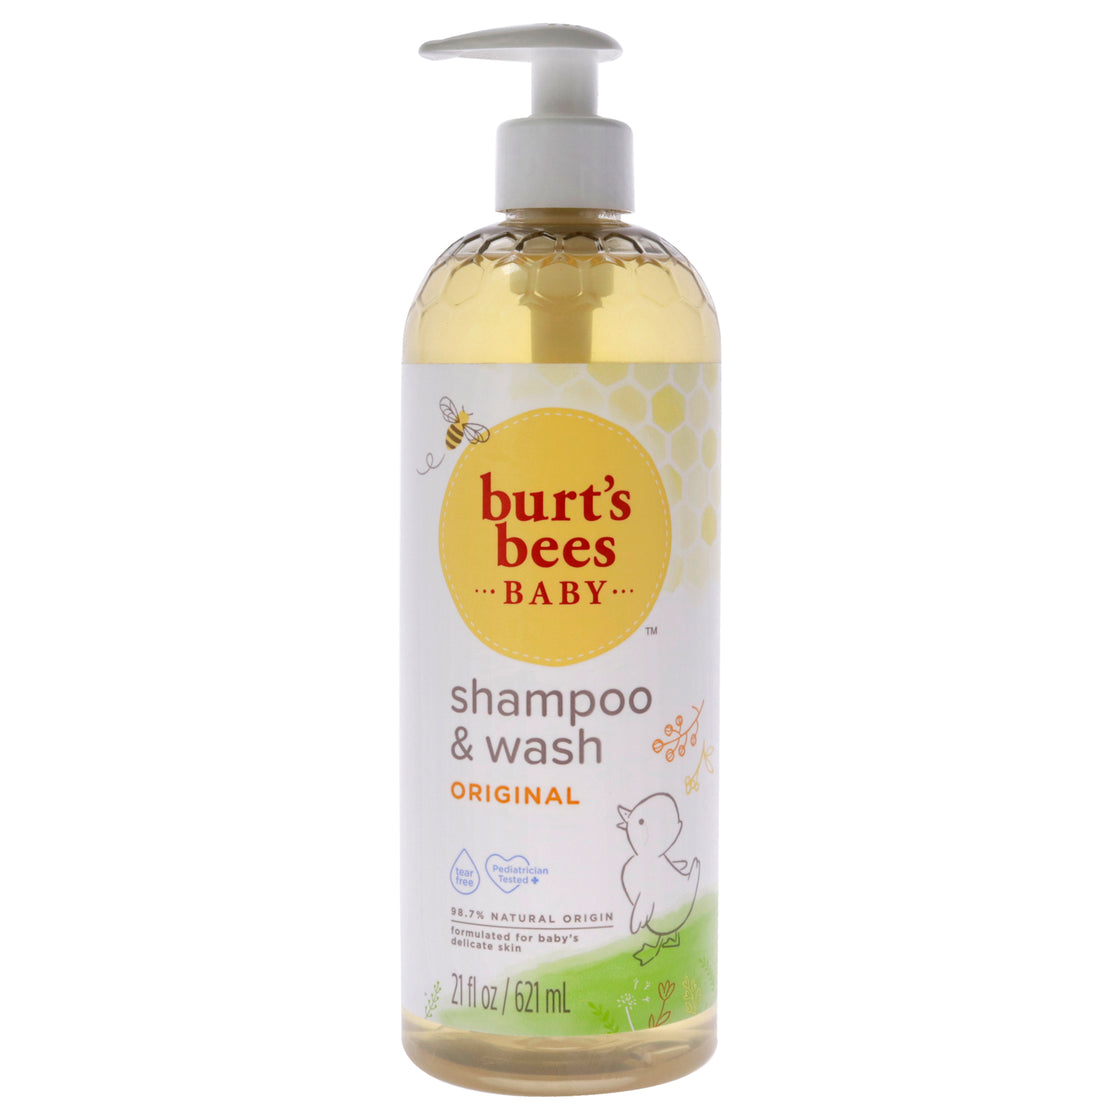 Baby Bee Shampoo and Wash Original by Burts Bees for Kids - 21 oz Shampoo and Body Wash